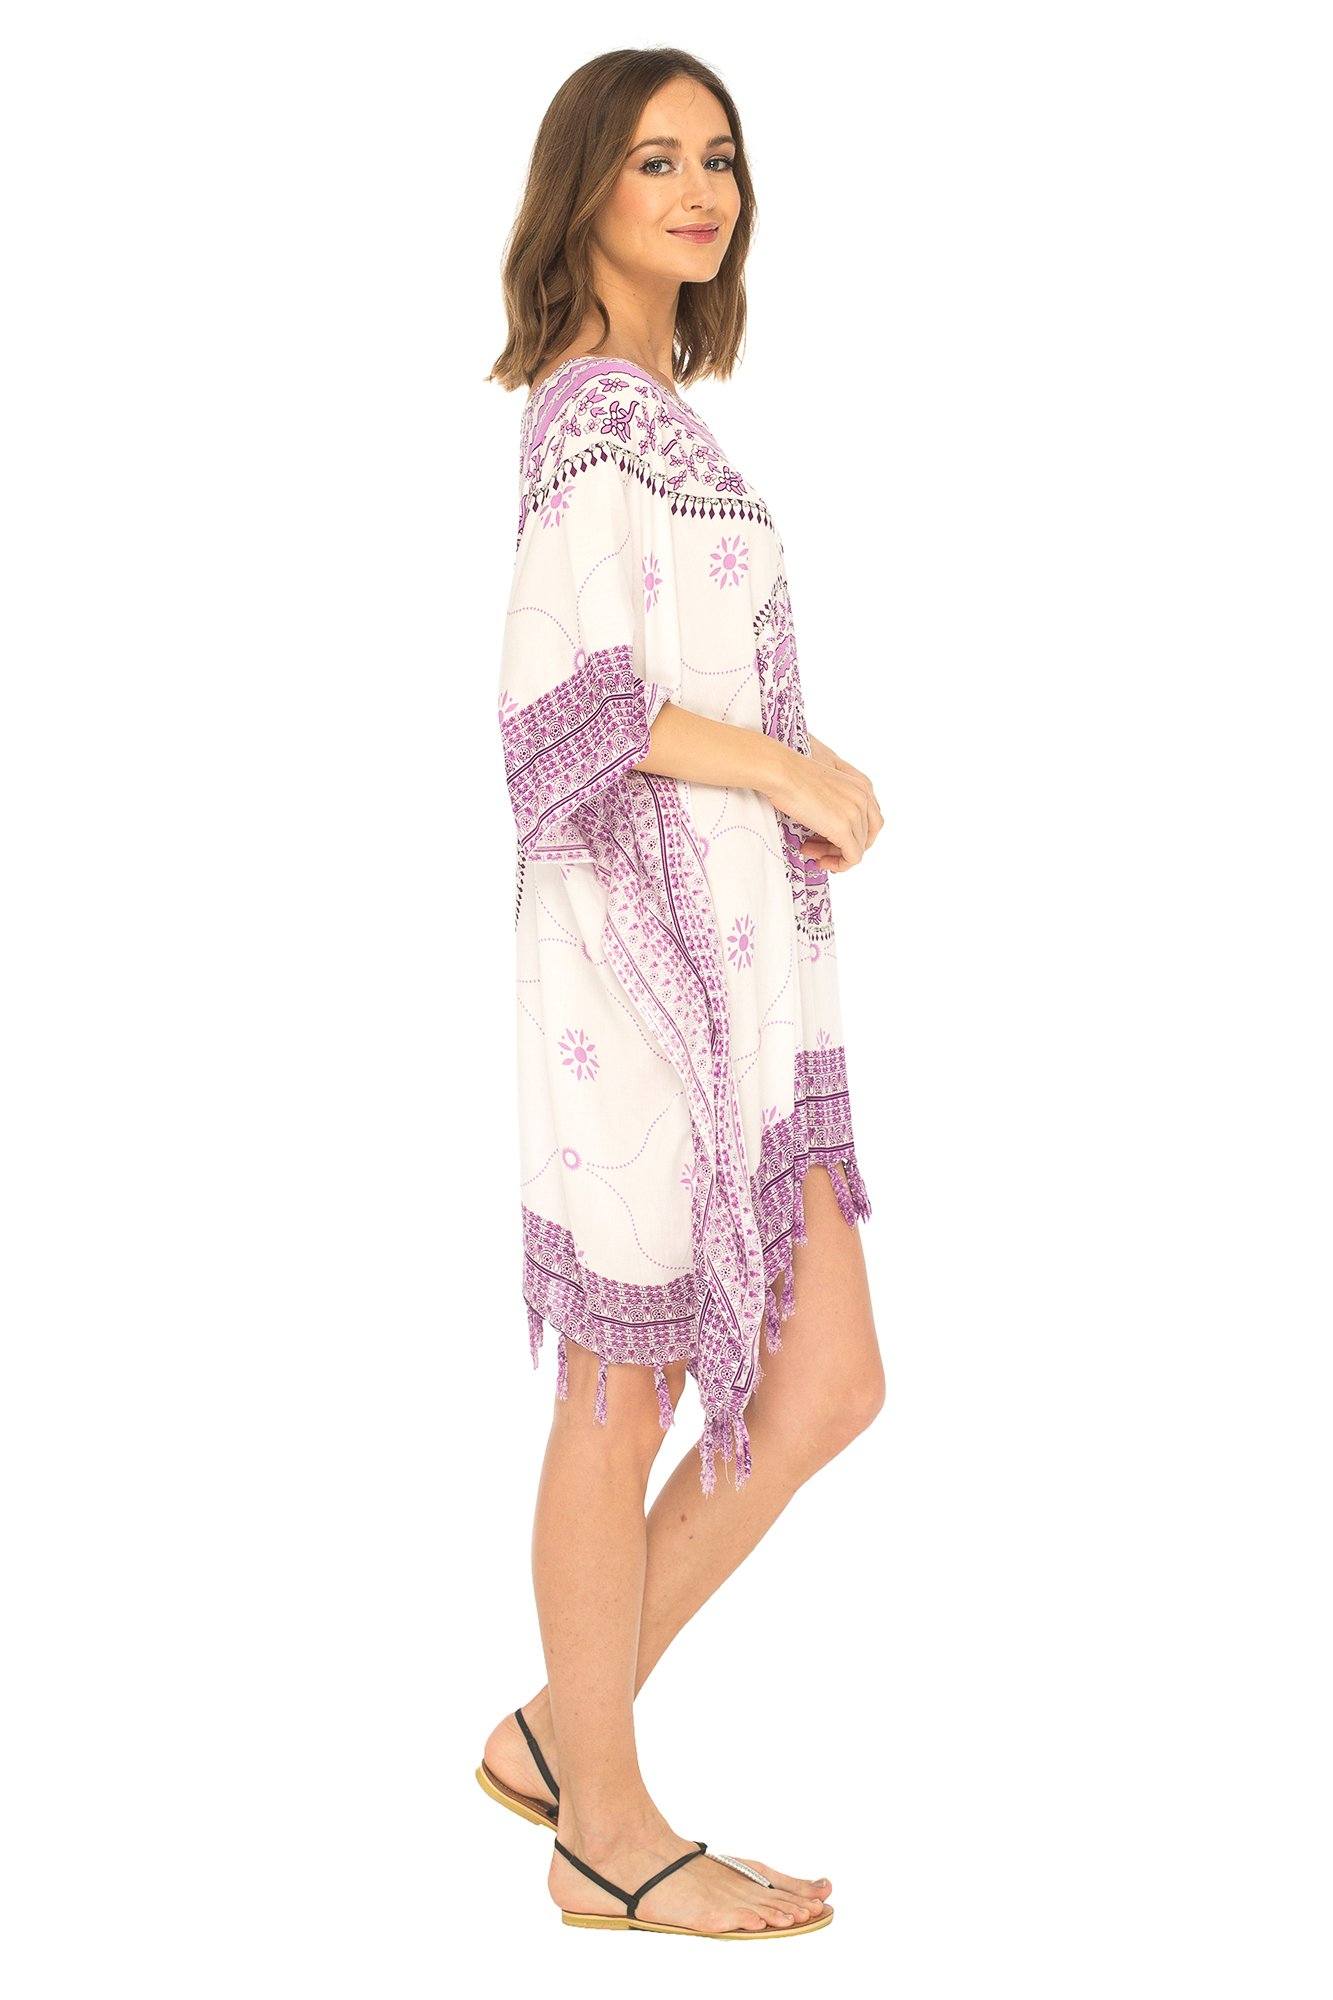 Mandala Print Short Poncho Dress with Hand Sewn Sequins - Love-Shu-Shi - White and Purple Poncho Dress